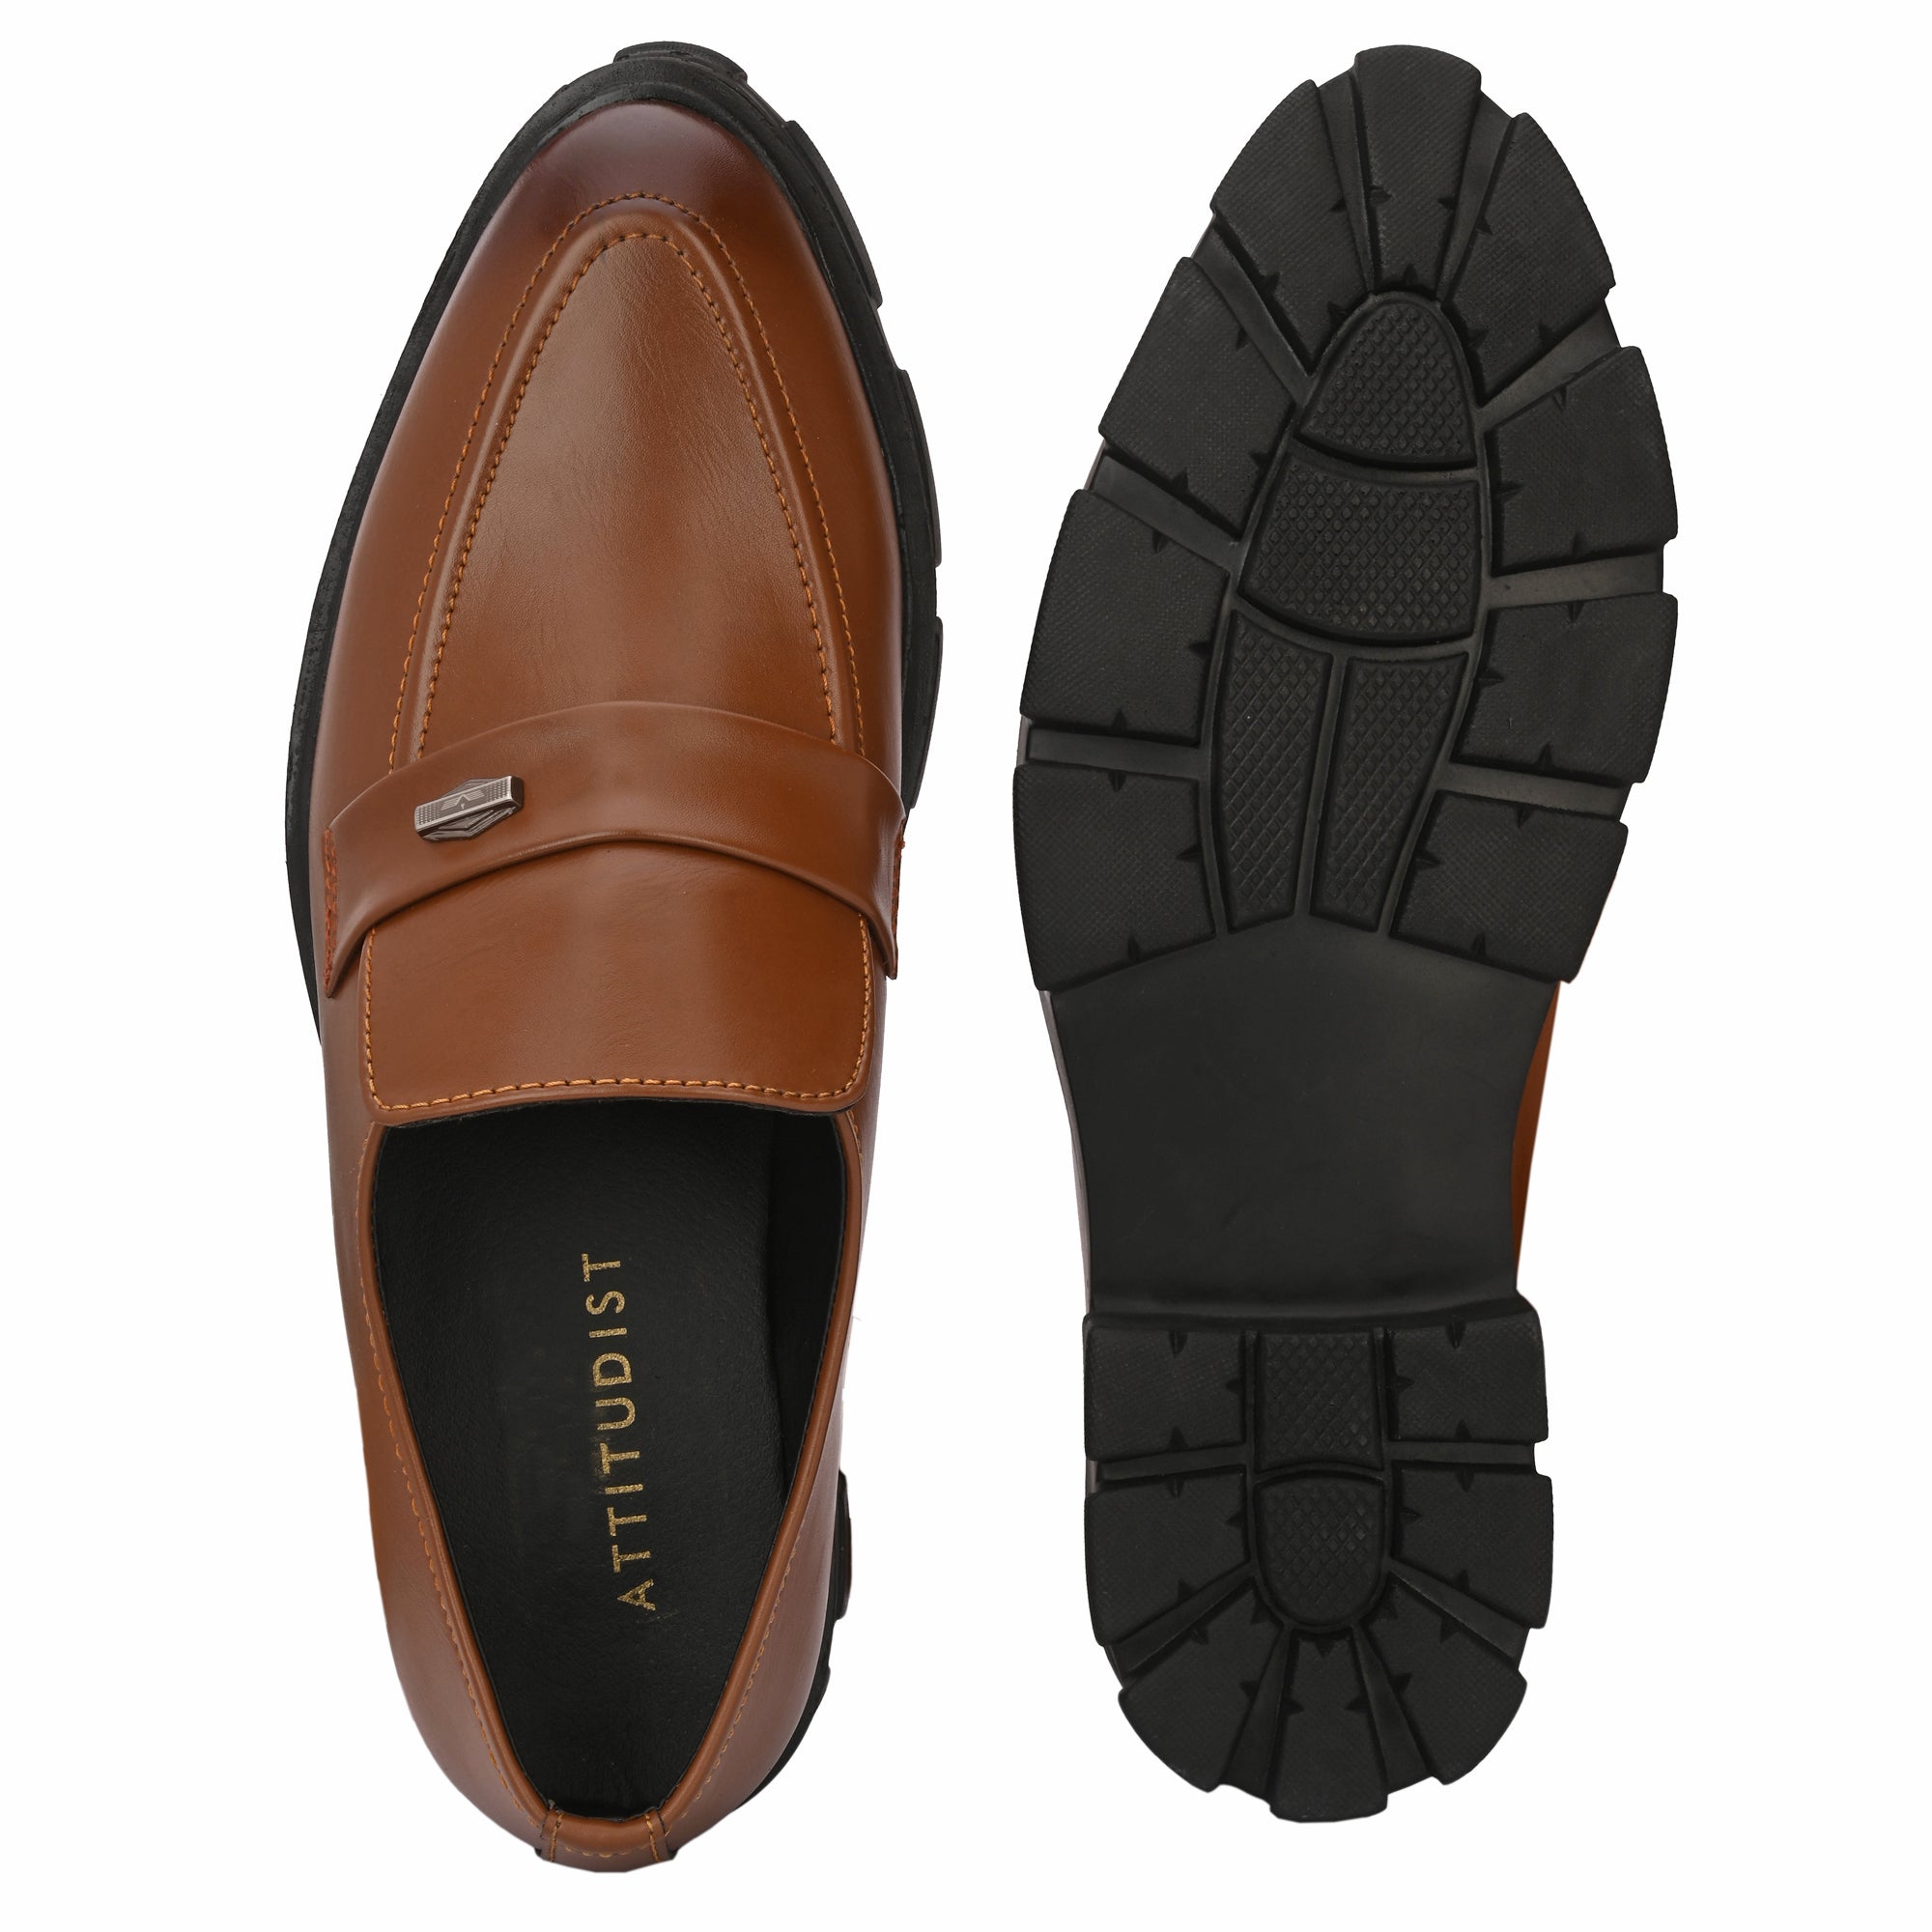 attitudist-tan-high-heel-slip-on-penny-loafer-shoes-for-men